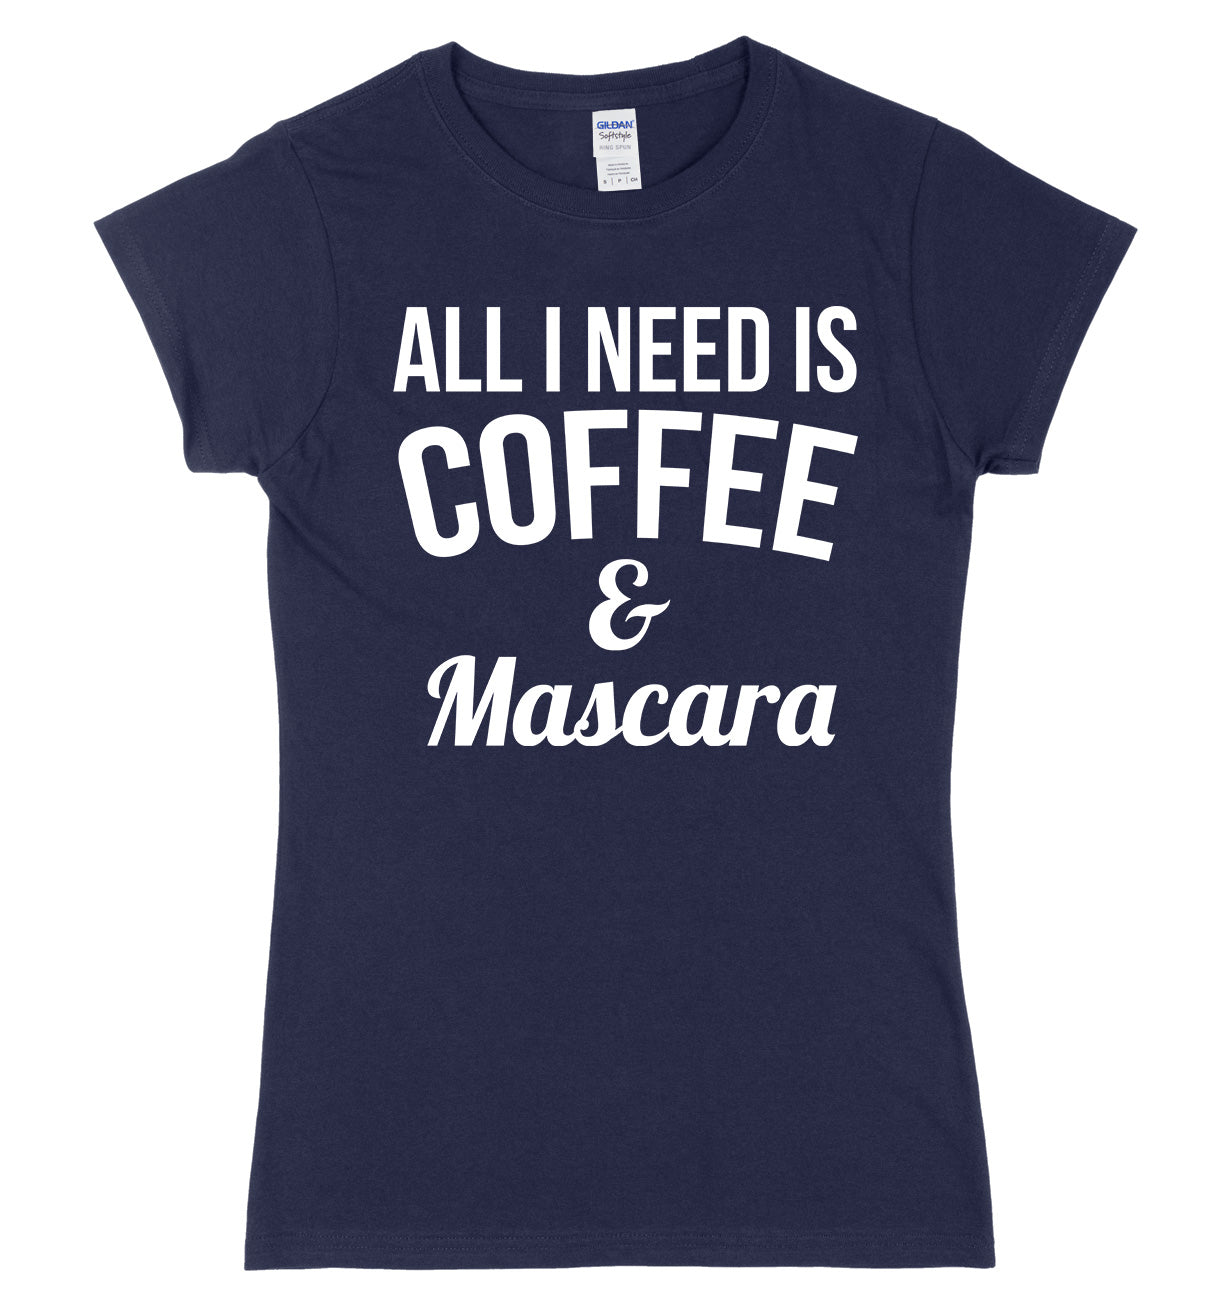 All I Need Is Coffee & Mascara Womens Ladies Slim Fit T-Shirt